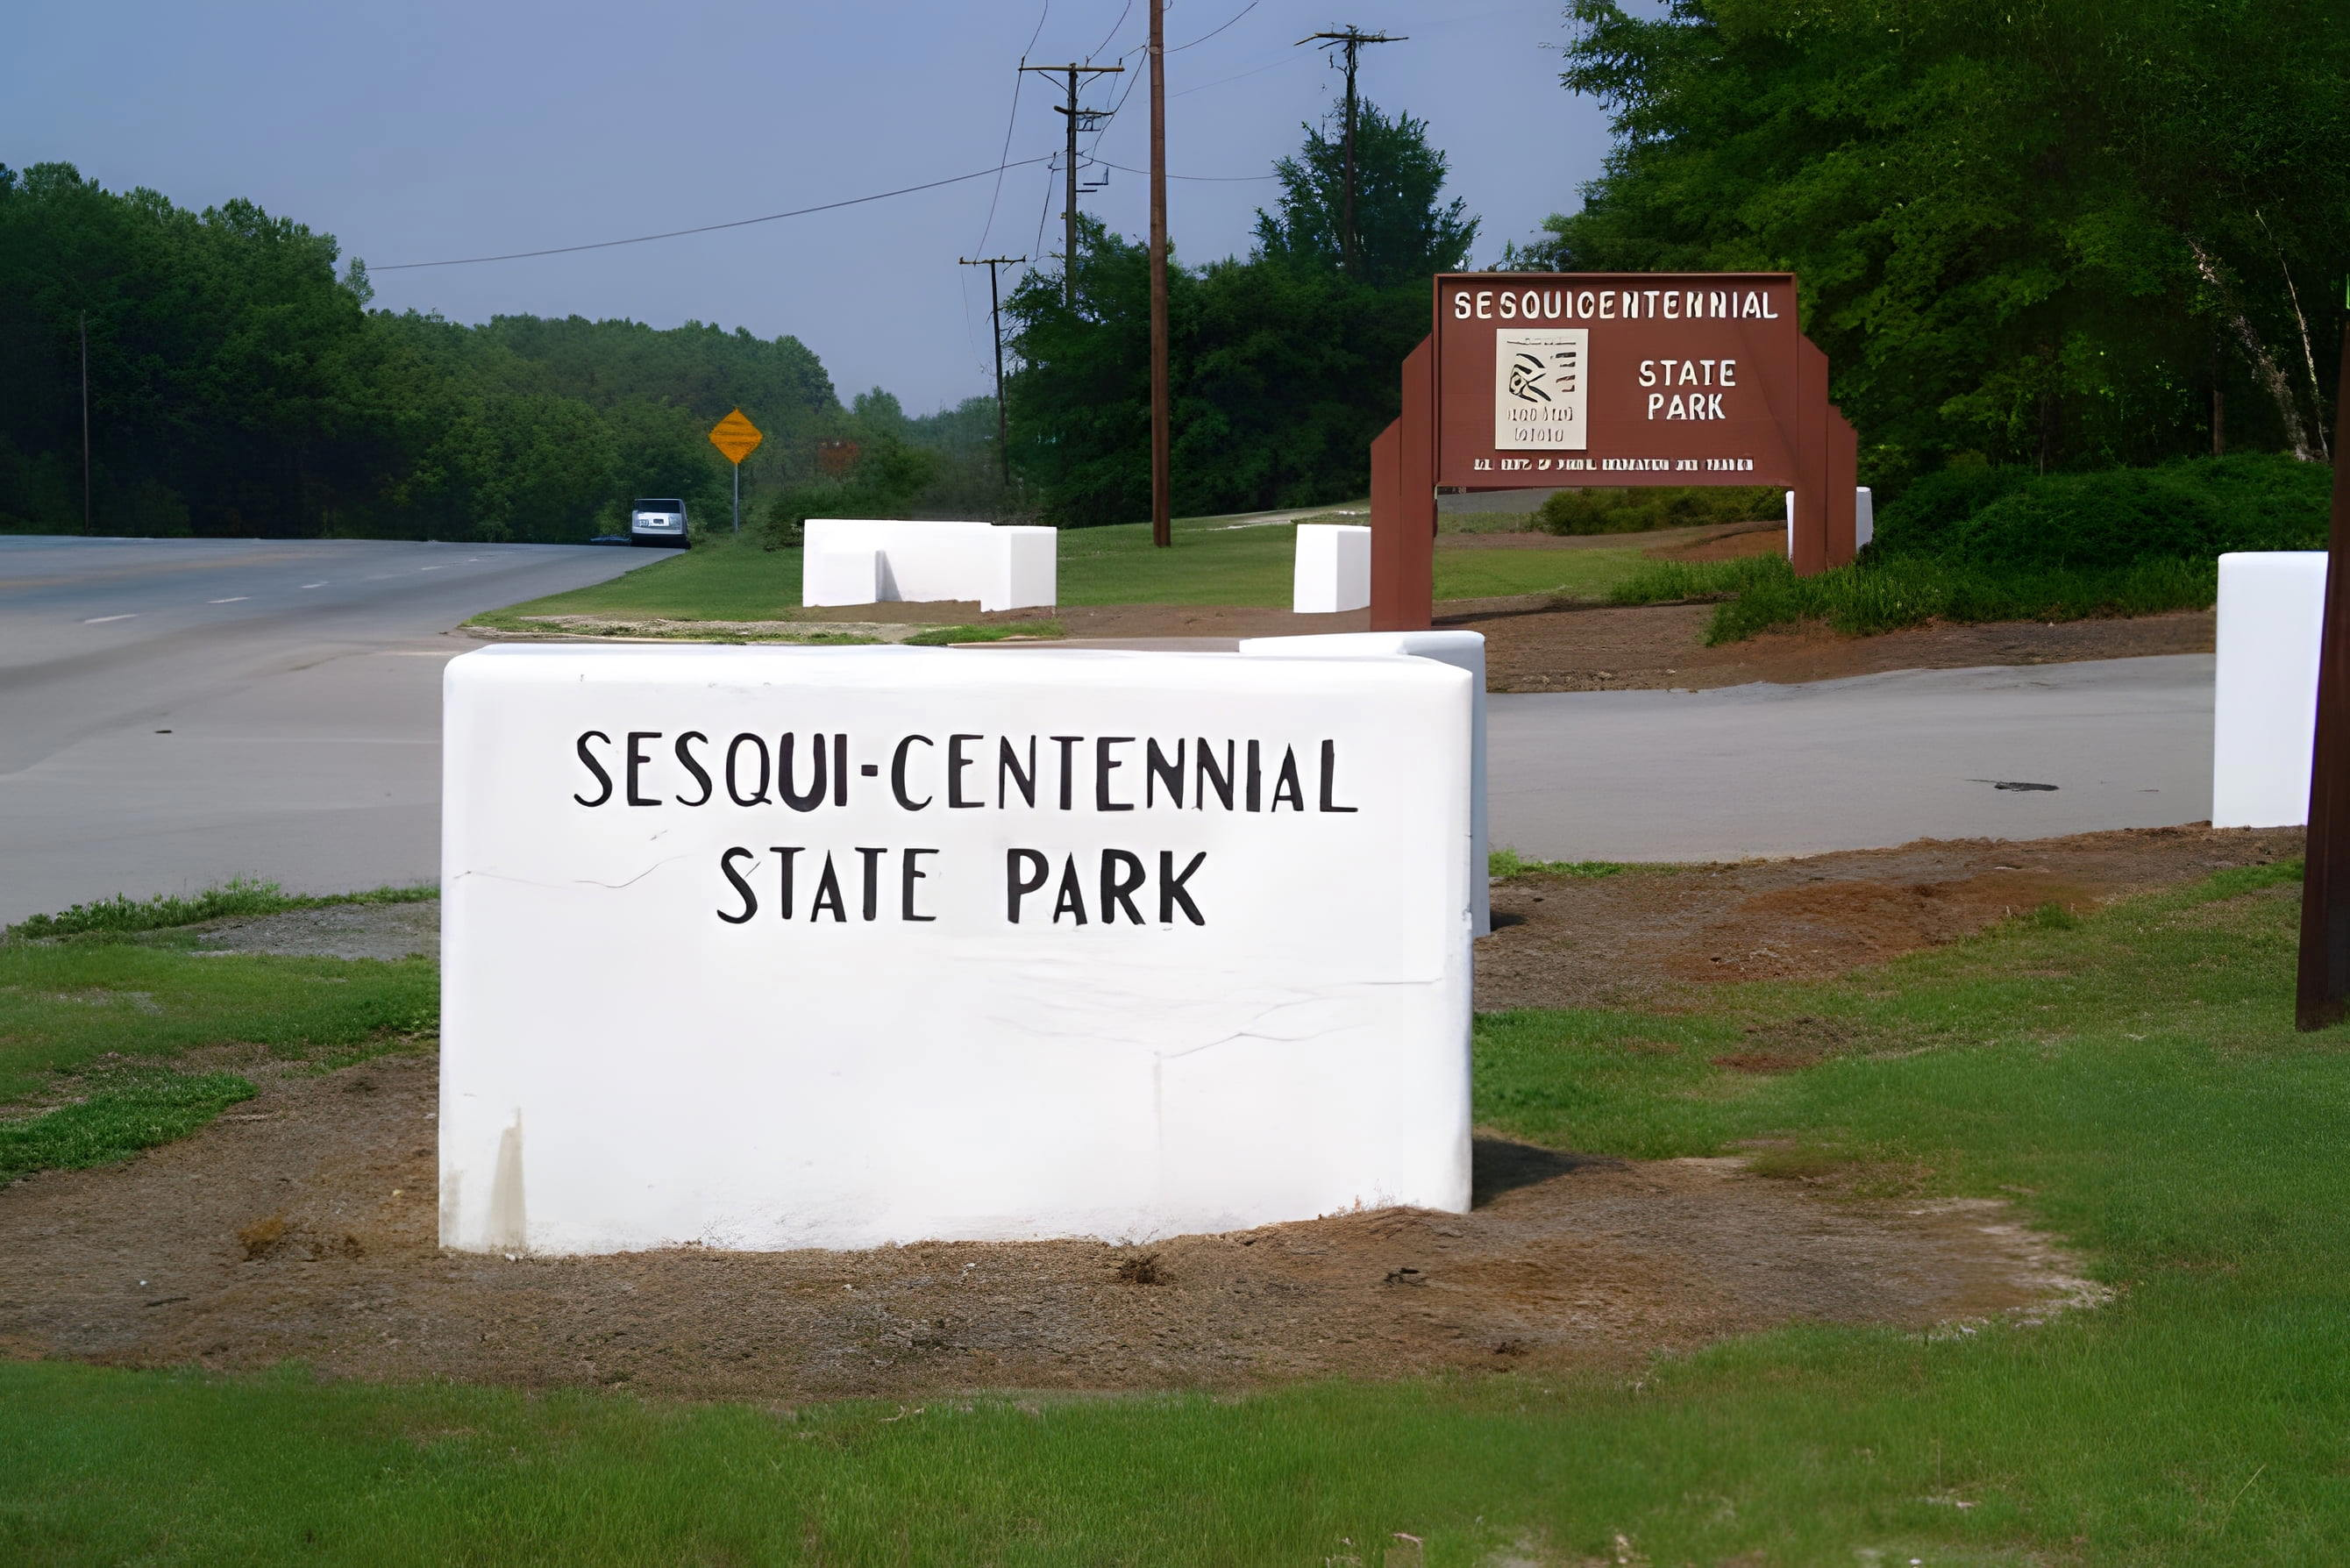 Štátny park Sesquicentennial